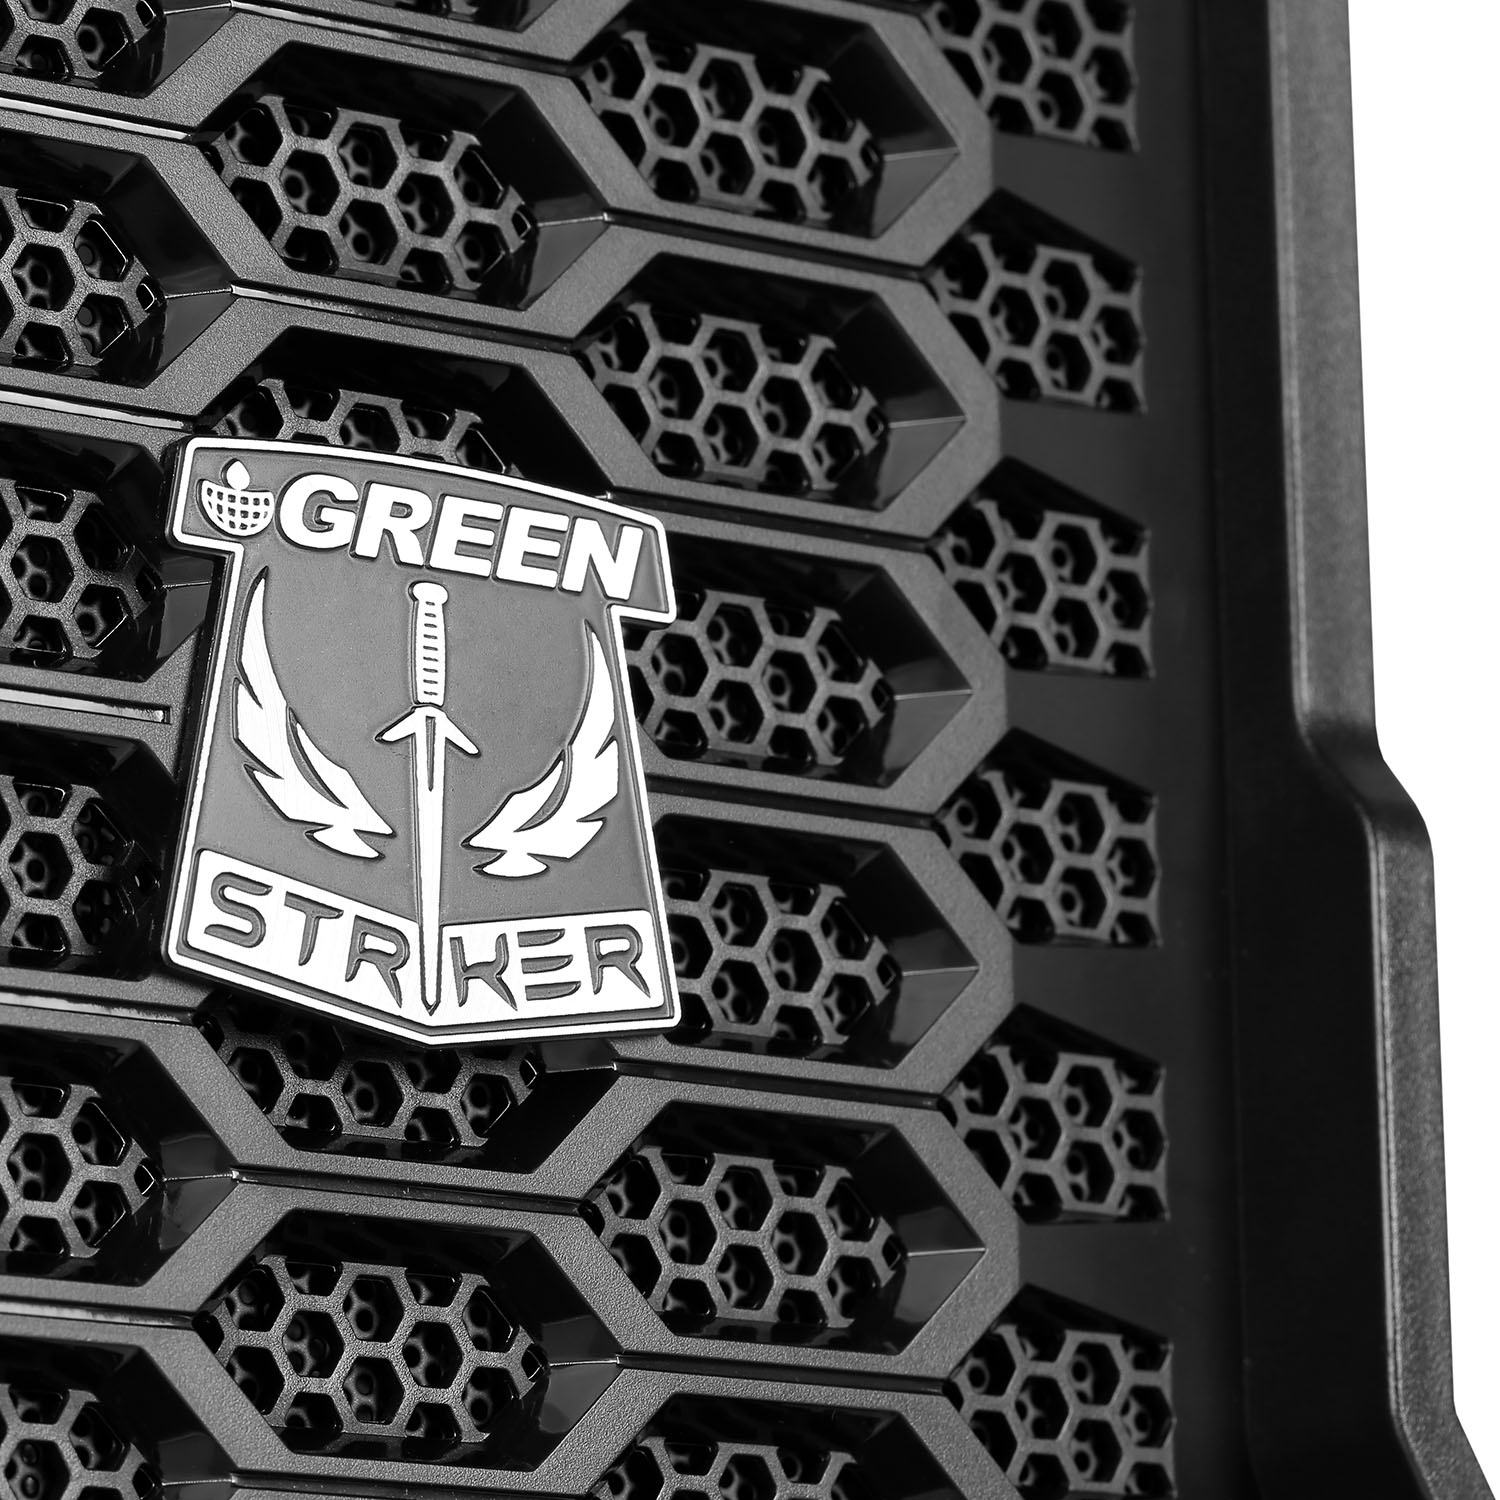 کیس گیم استرایکر Striker Gaming Chassis with USB Type-C